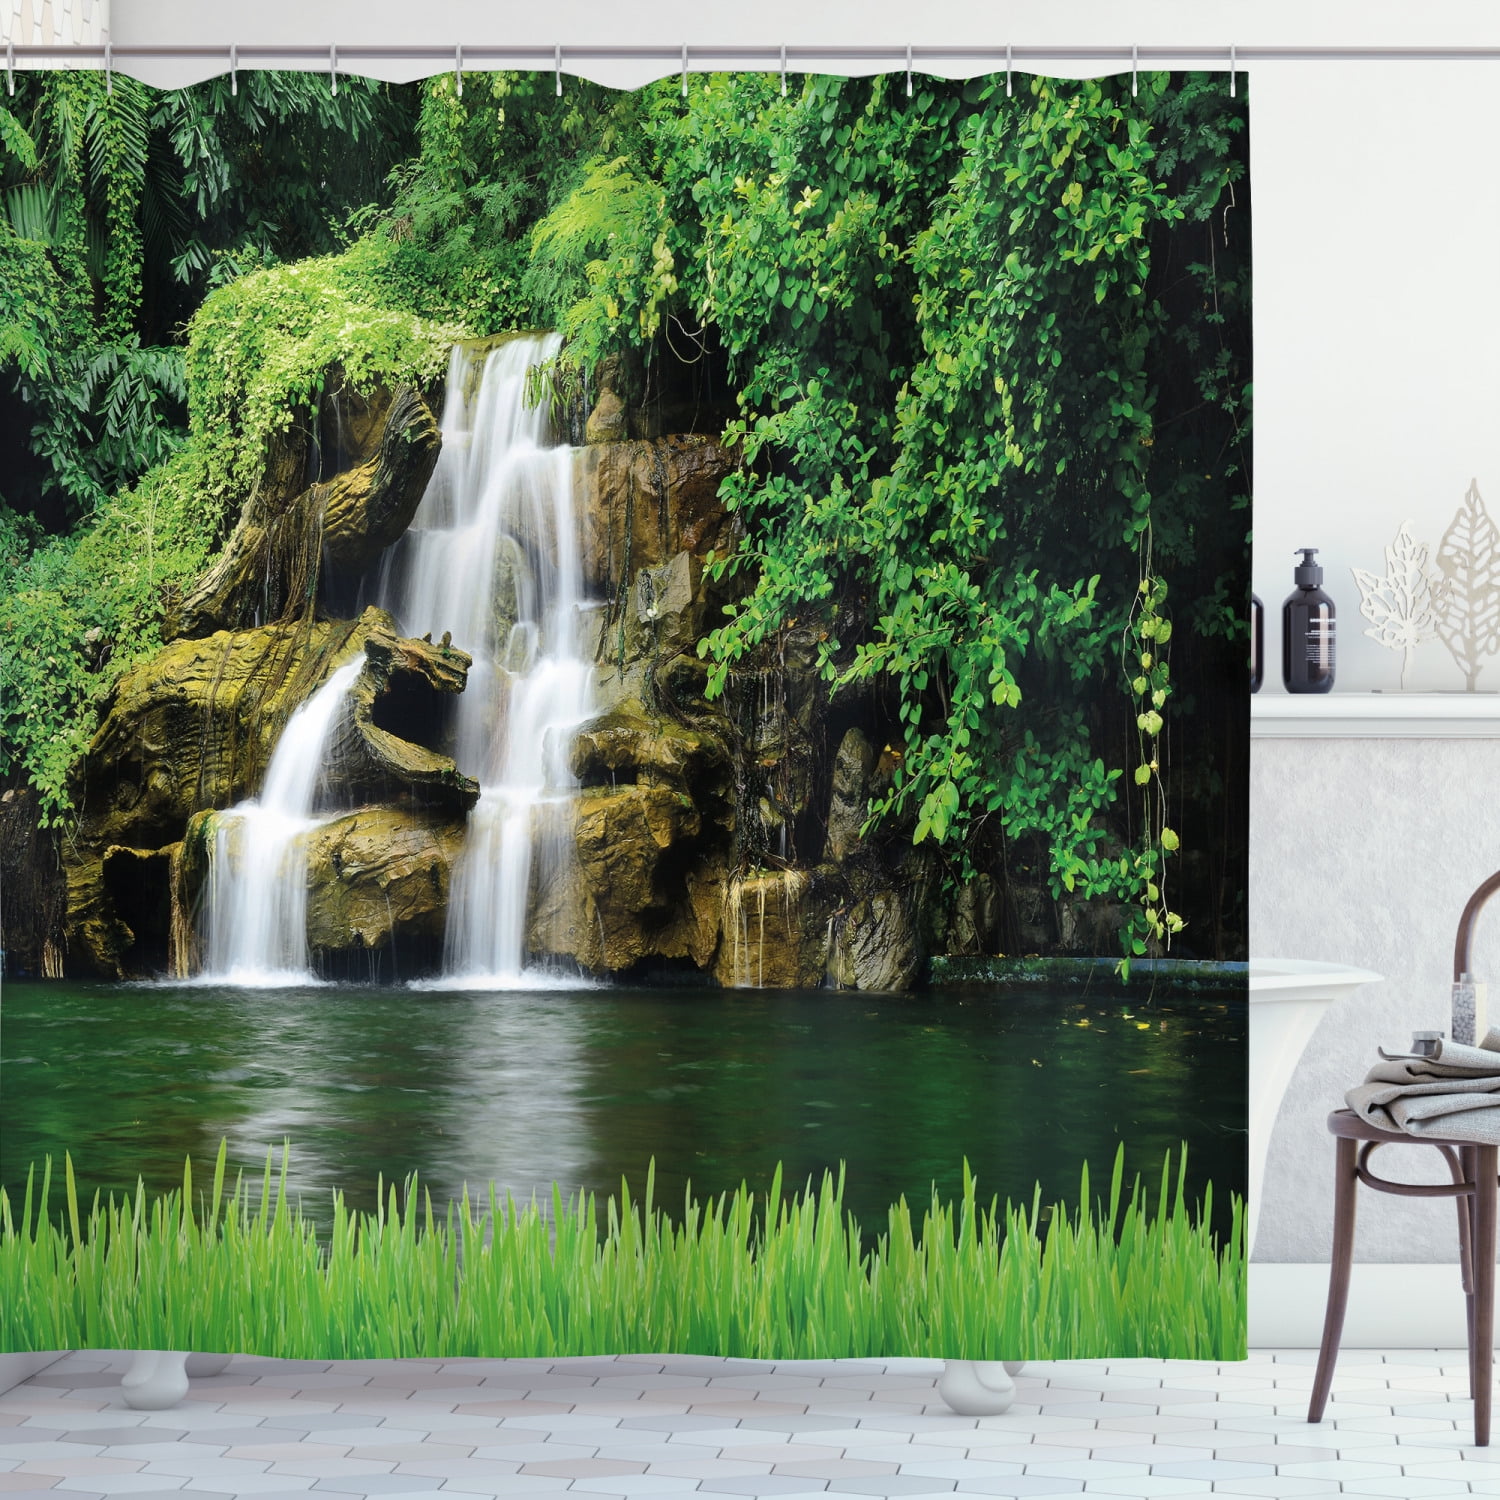 Waterfall Garden Scenery Shower Curtain Liner Waterpoof Fabric & Hooks 72x72" 